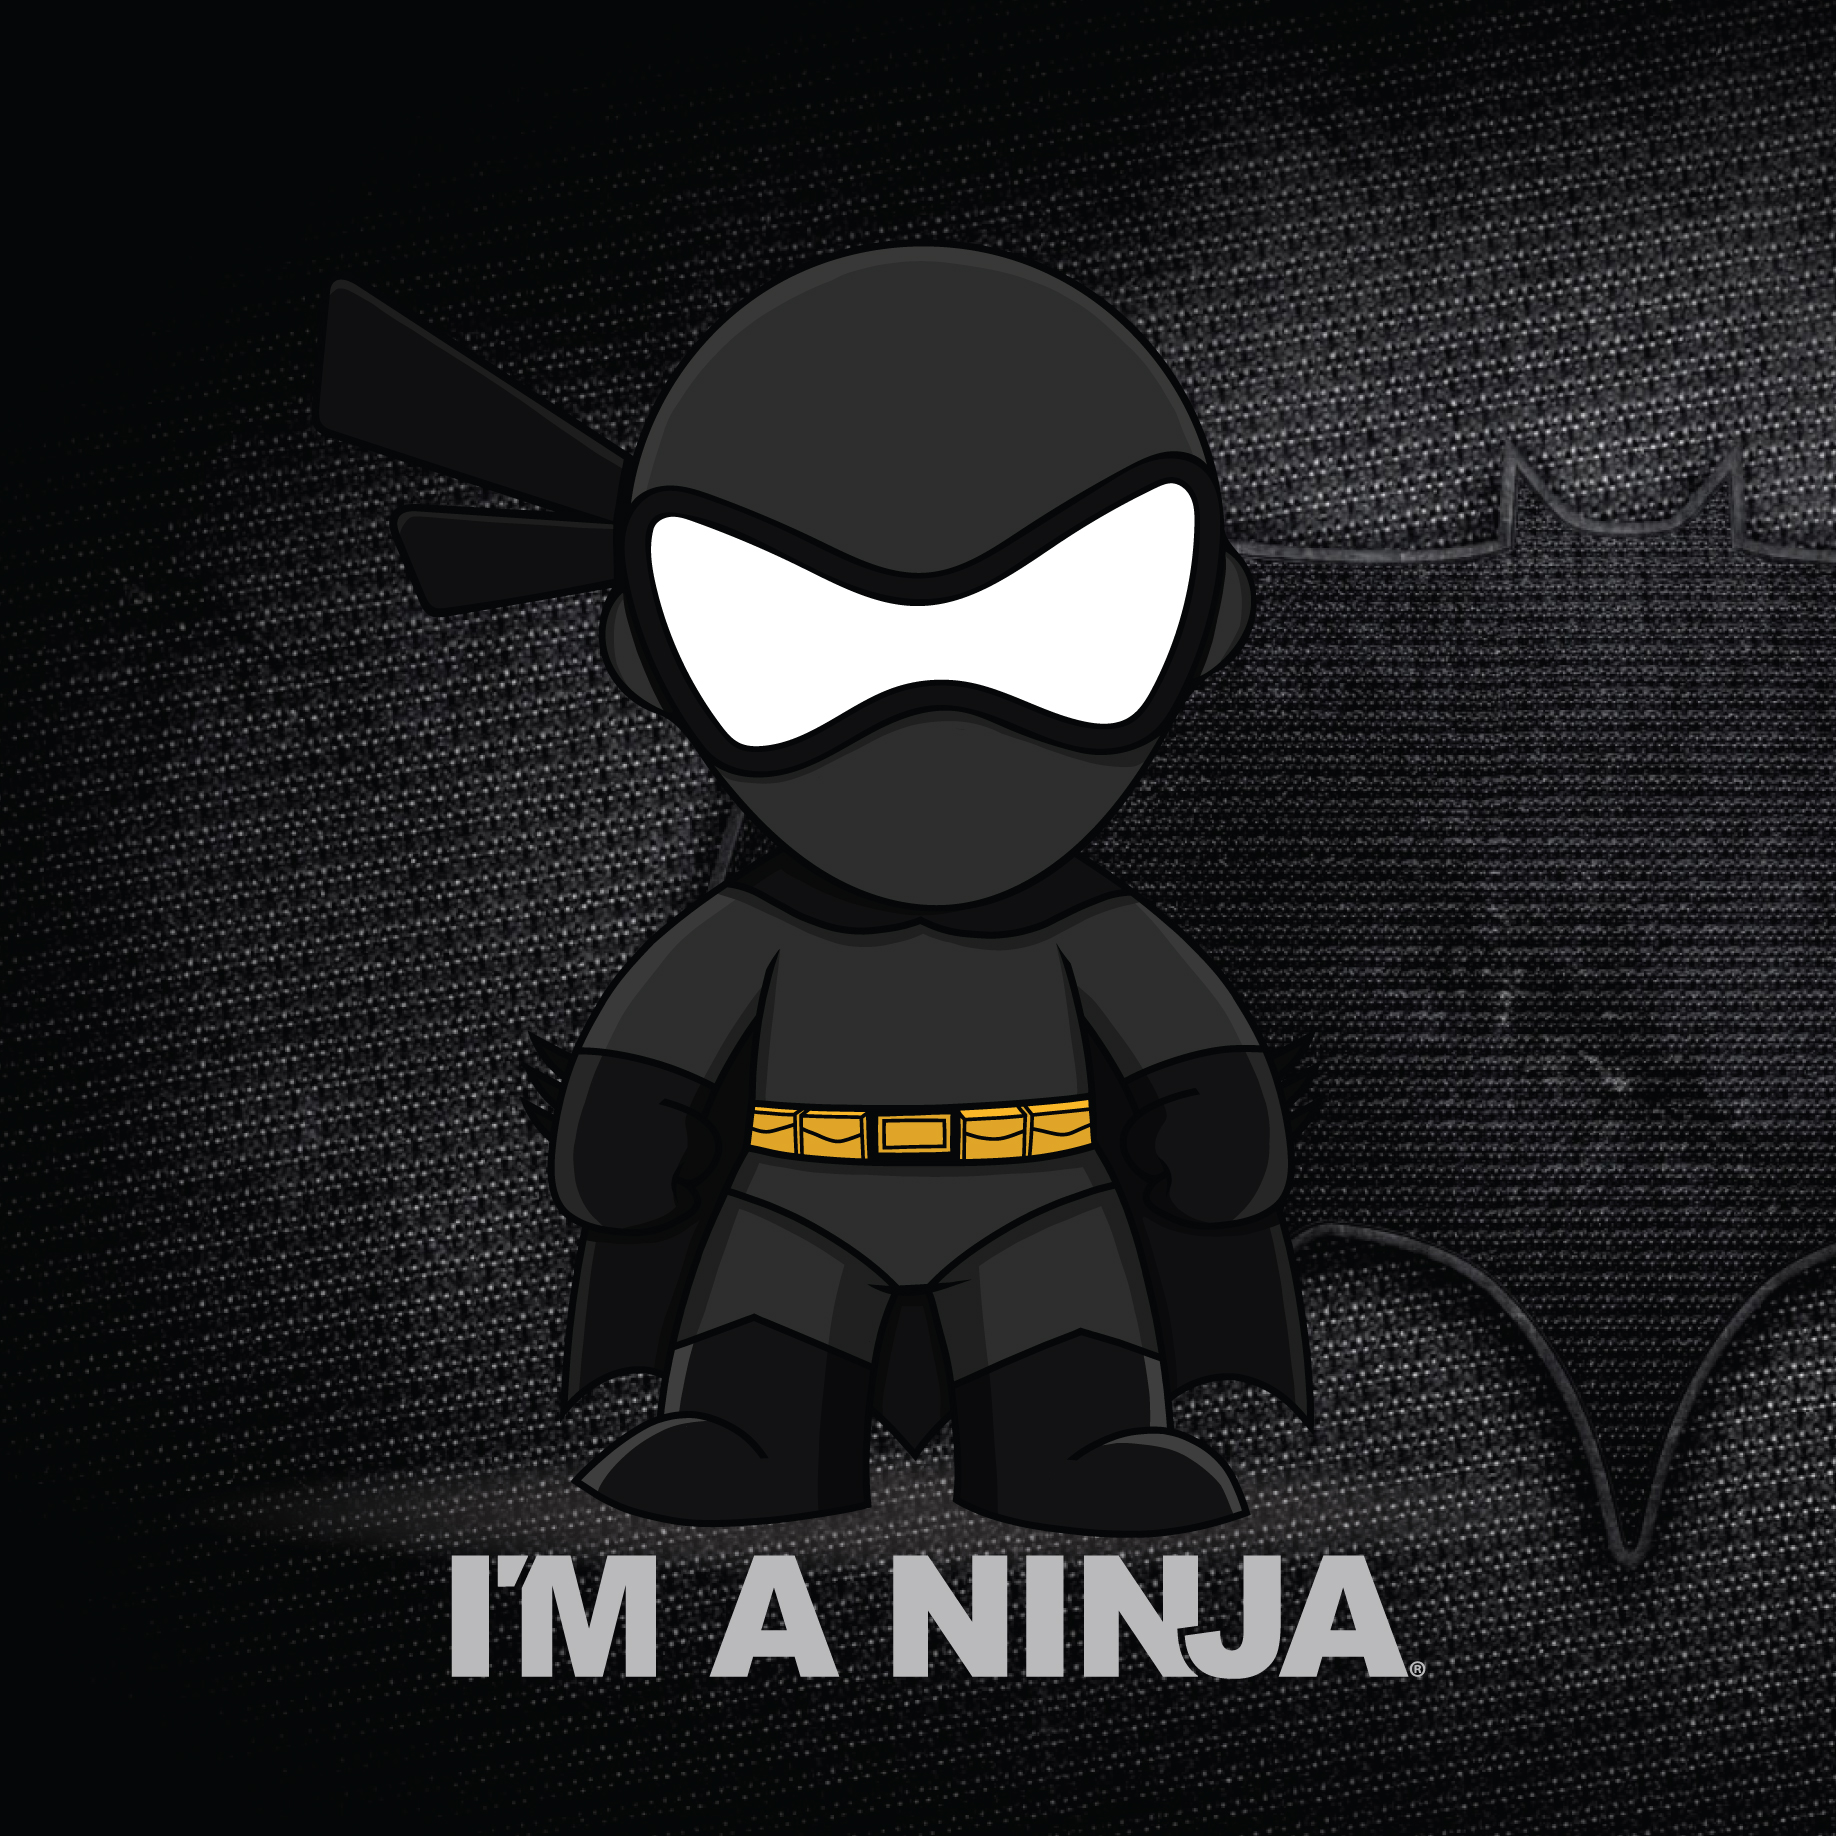 Batman x I'M A NINJA